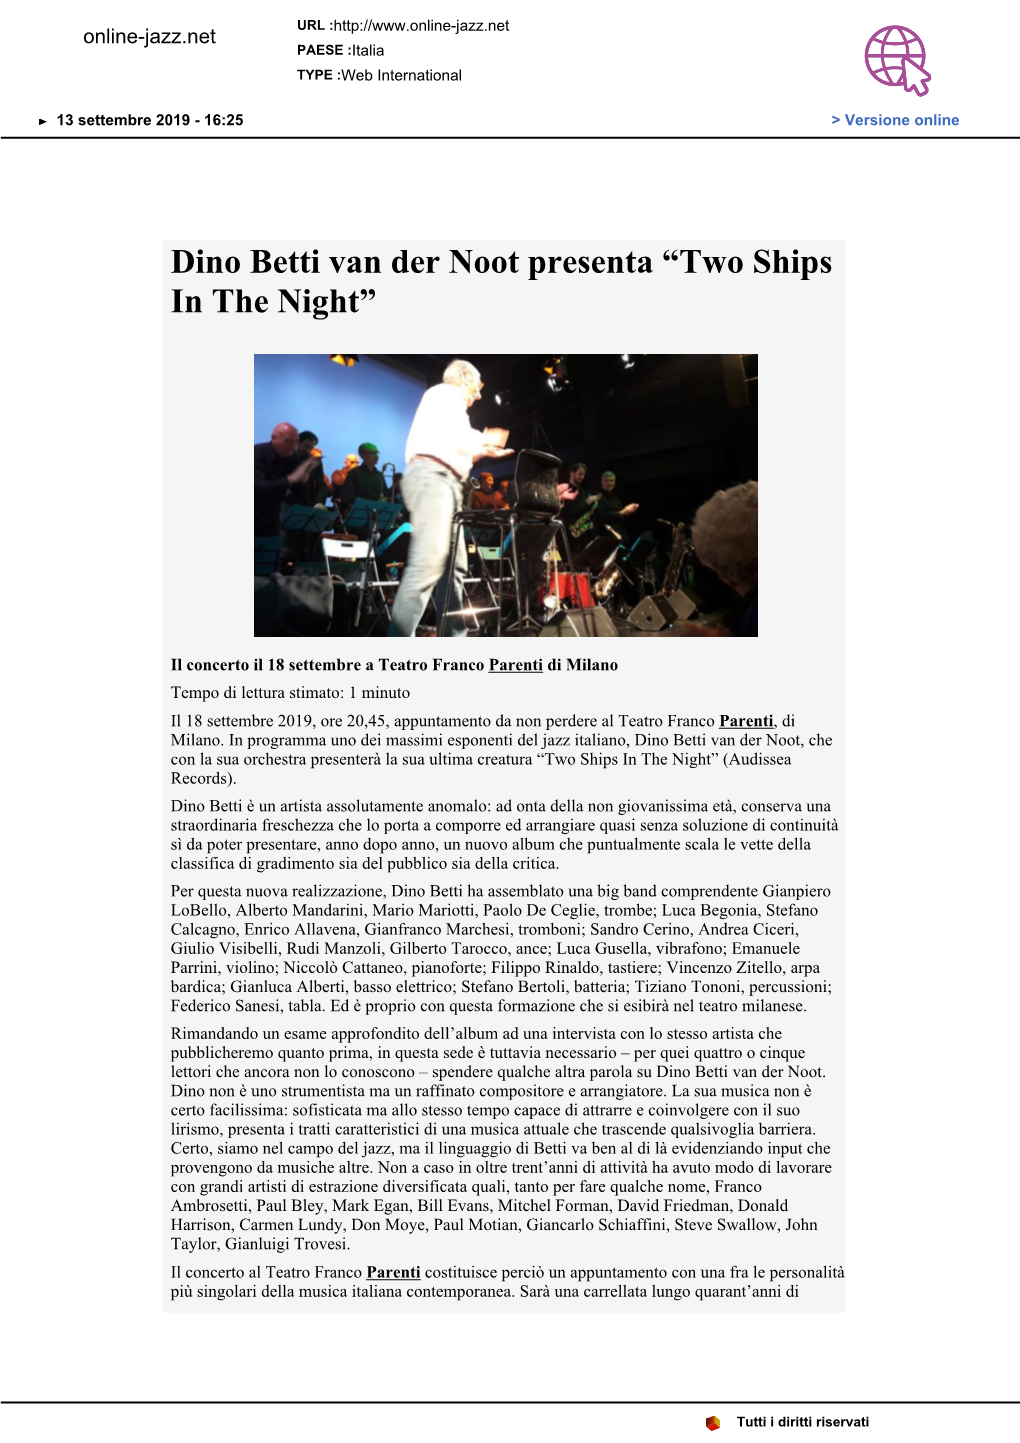 Dino Betti Van Der Noot Presenta “Two Ships in the Night”